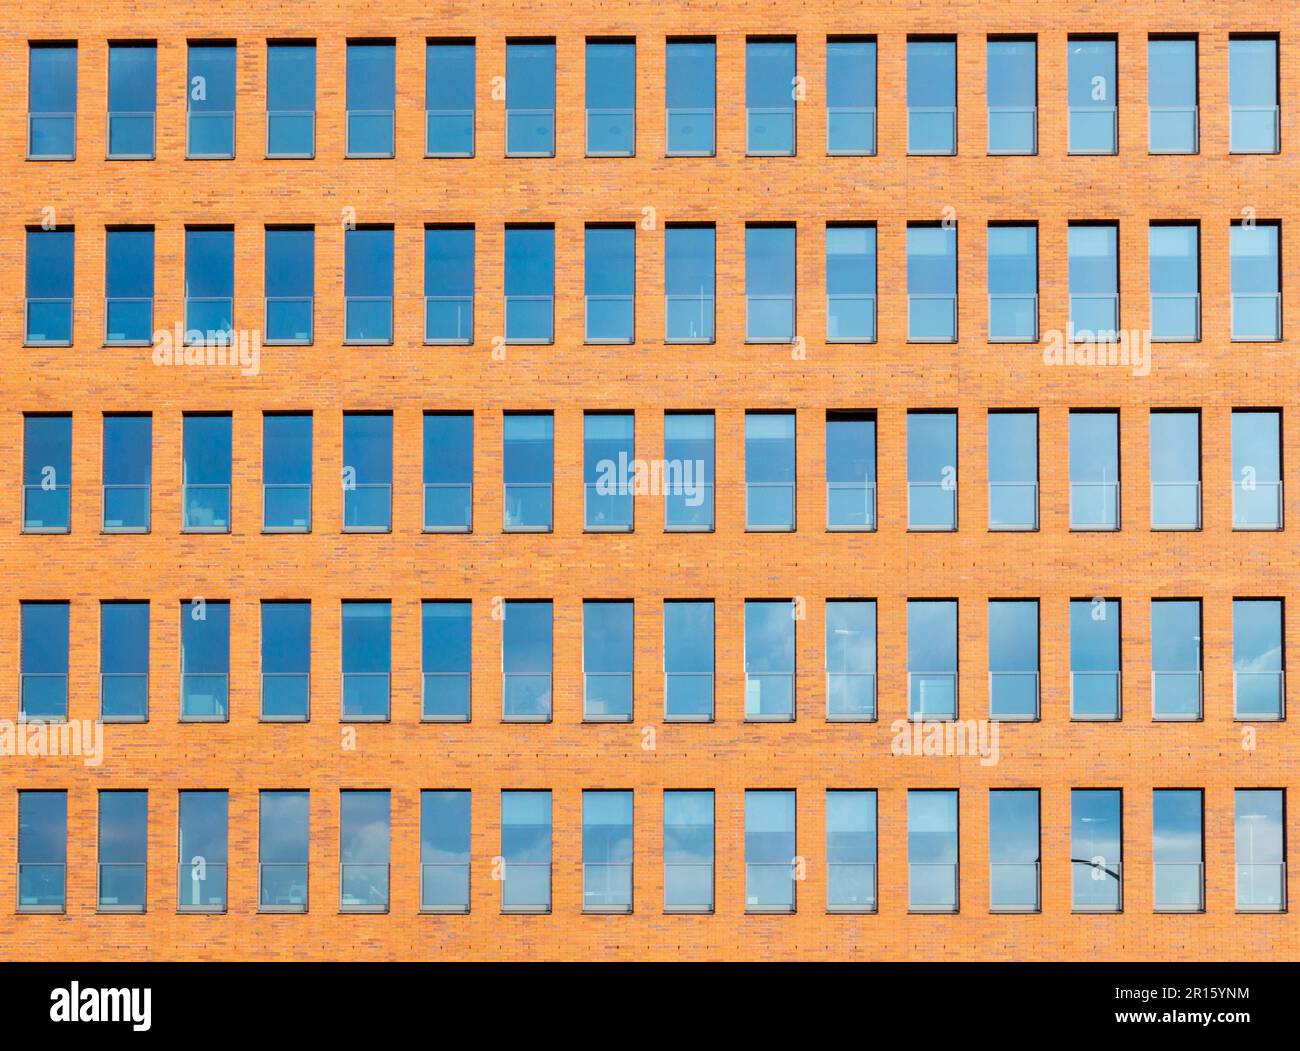 Background of an orange brick wall with many windows Stock Photo